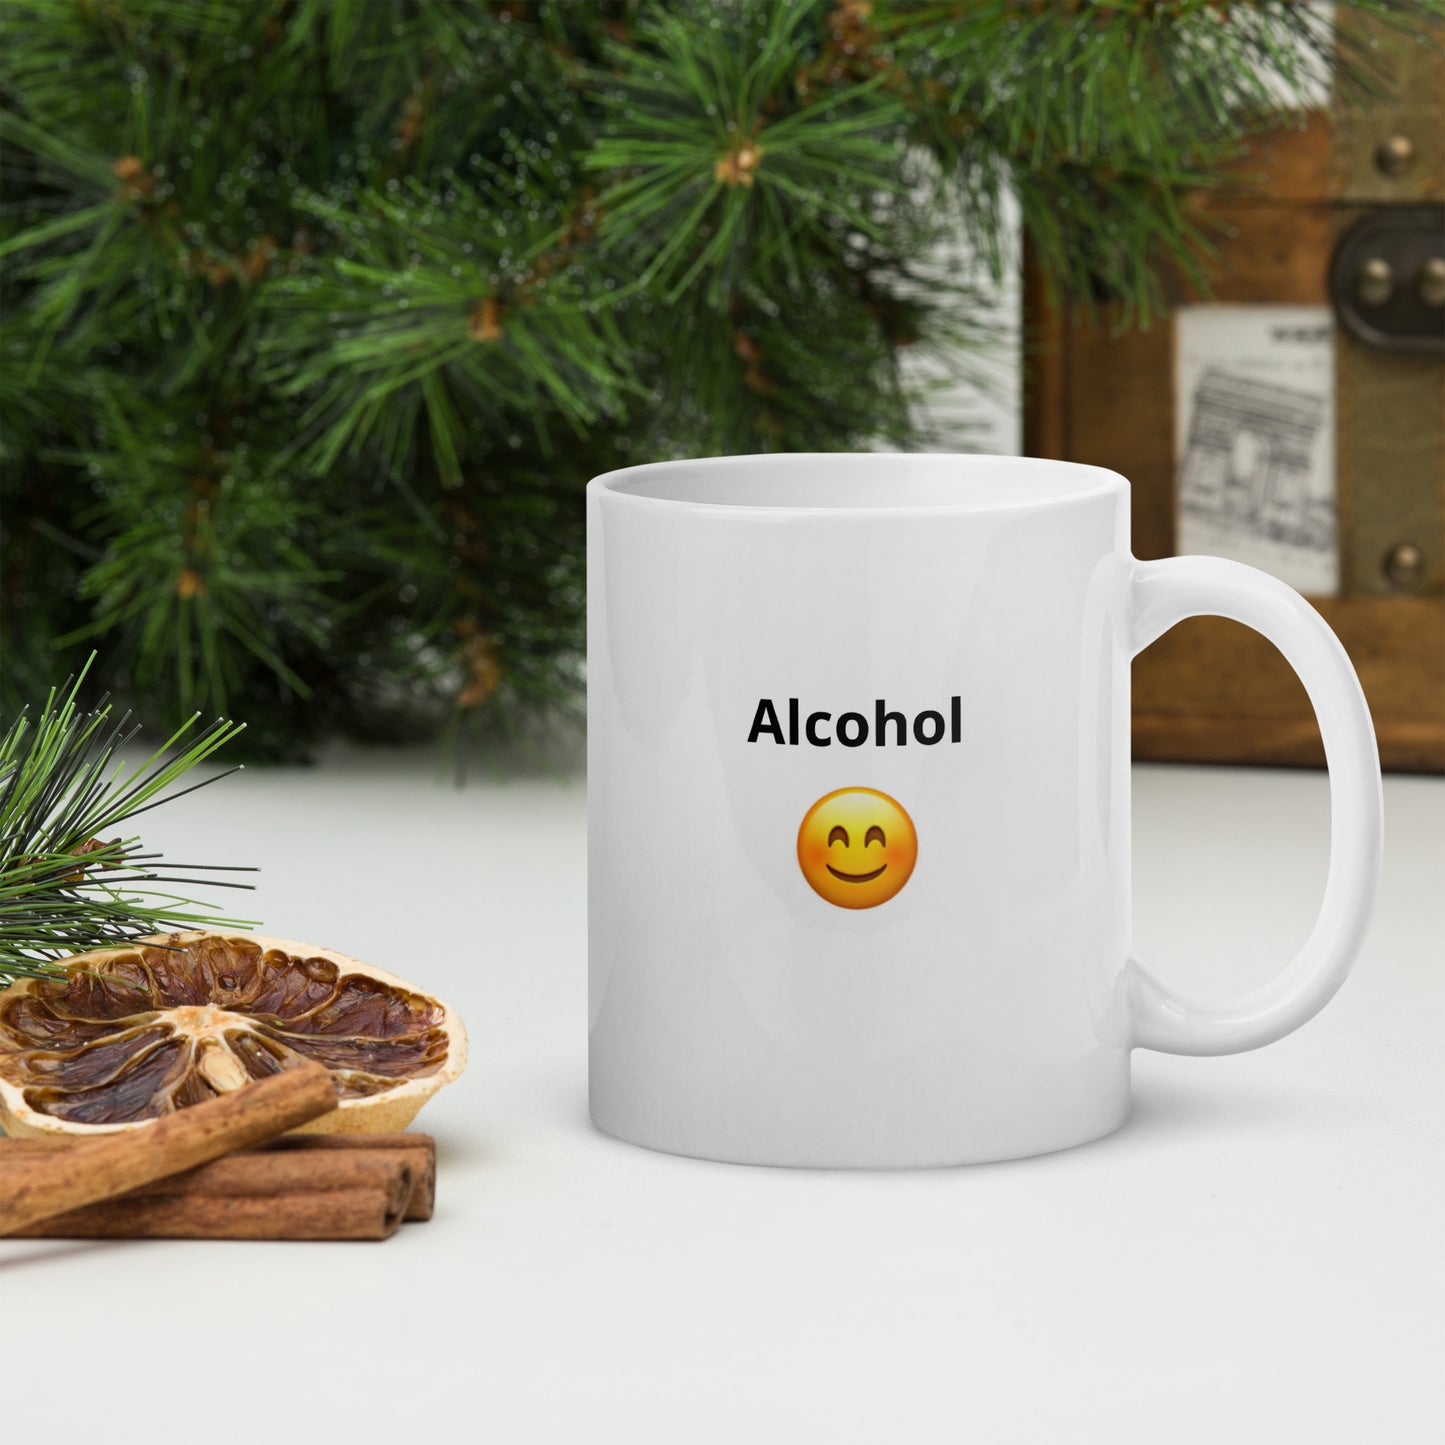 White ceramic mug with a happy face says  "Alcohol"